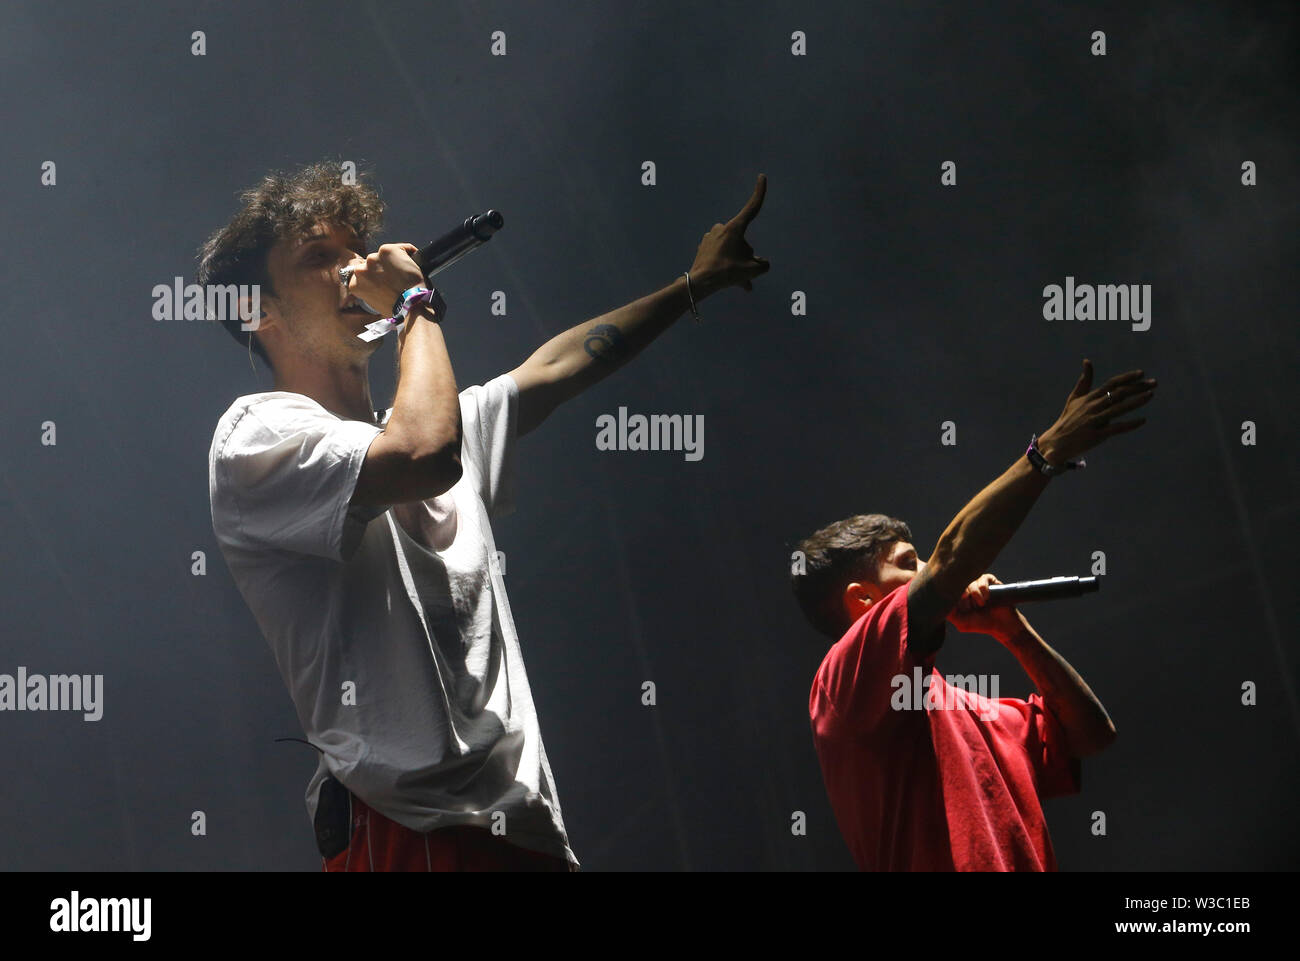 Ayax y Prok Brüder rap Sänger live während ihrer Show im Mallorca Live  Festival 2019 Stockfotografie - Alamy